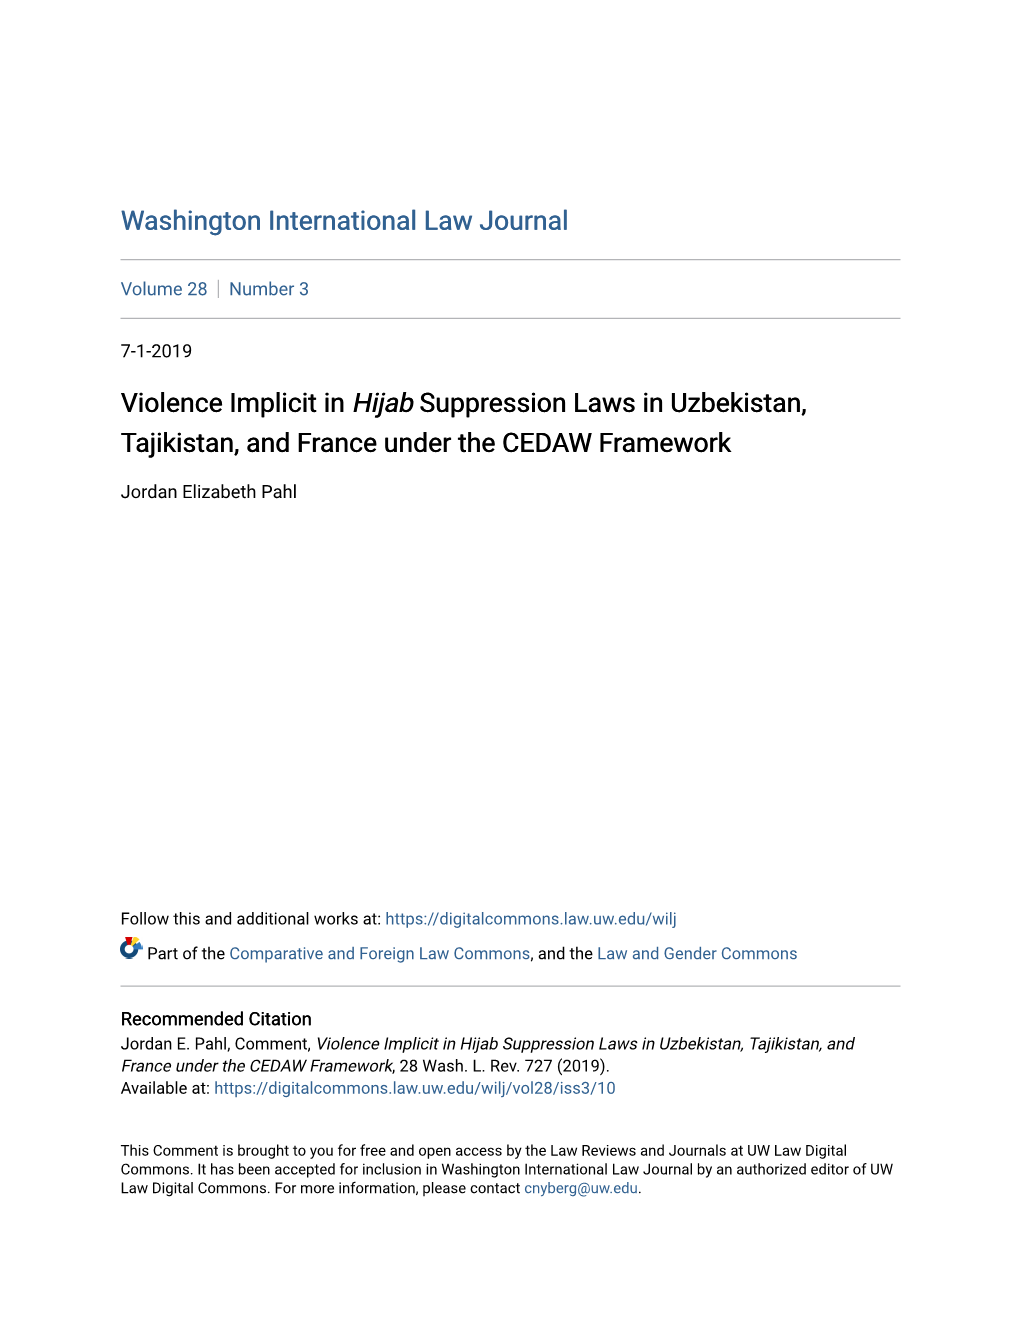 Violence Implicit in Hijab Suppression Laws in Uzbekistan, Tajikistan, and France Under the CEDAW Framework